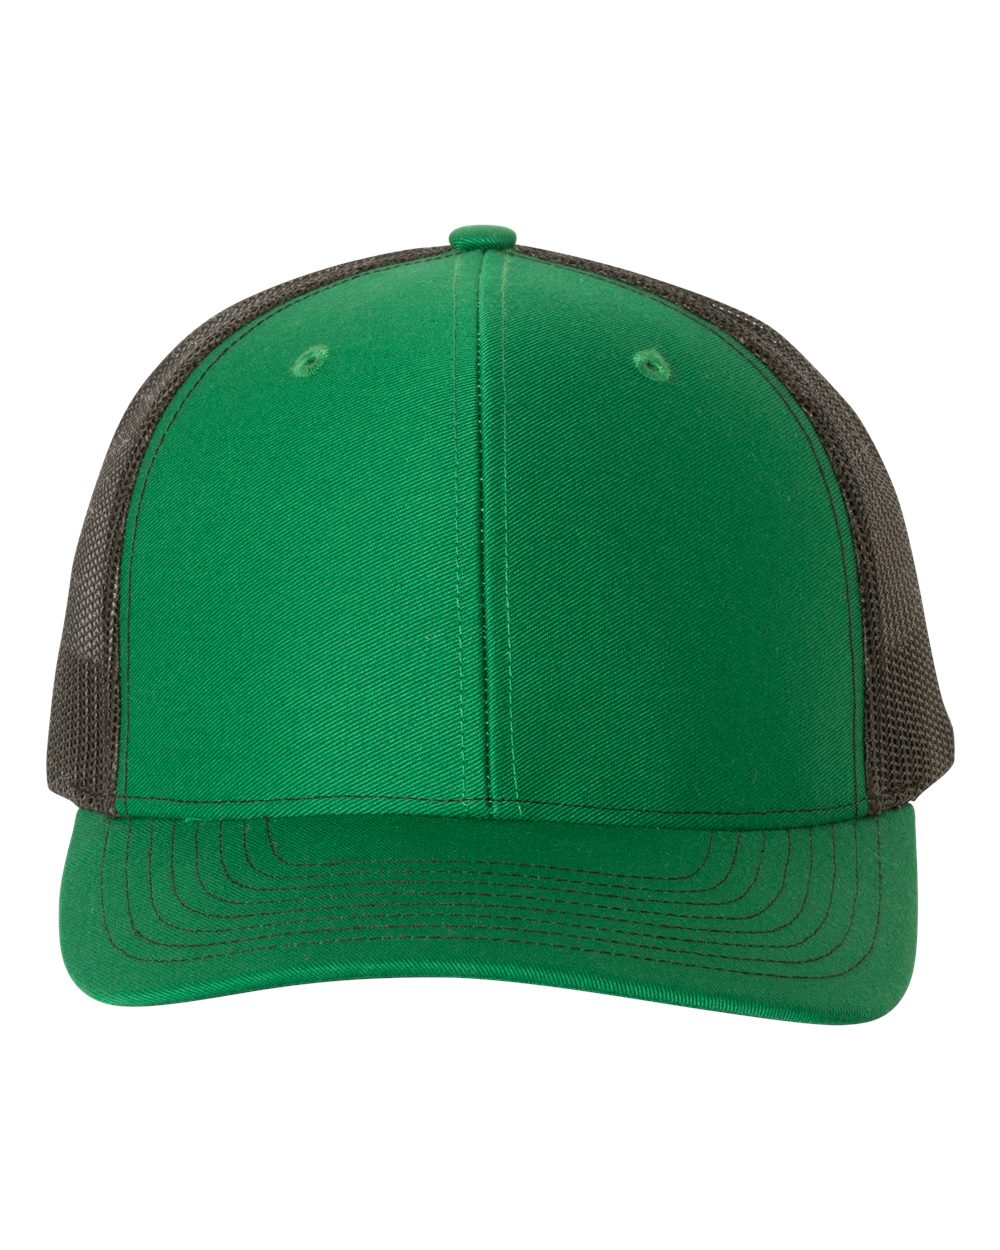 Richardson Snapback Trucker Hat (112) in Kelly/Black